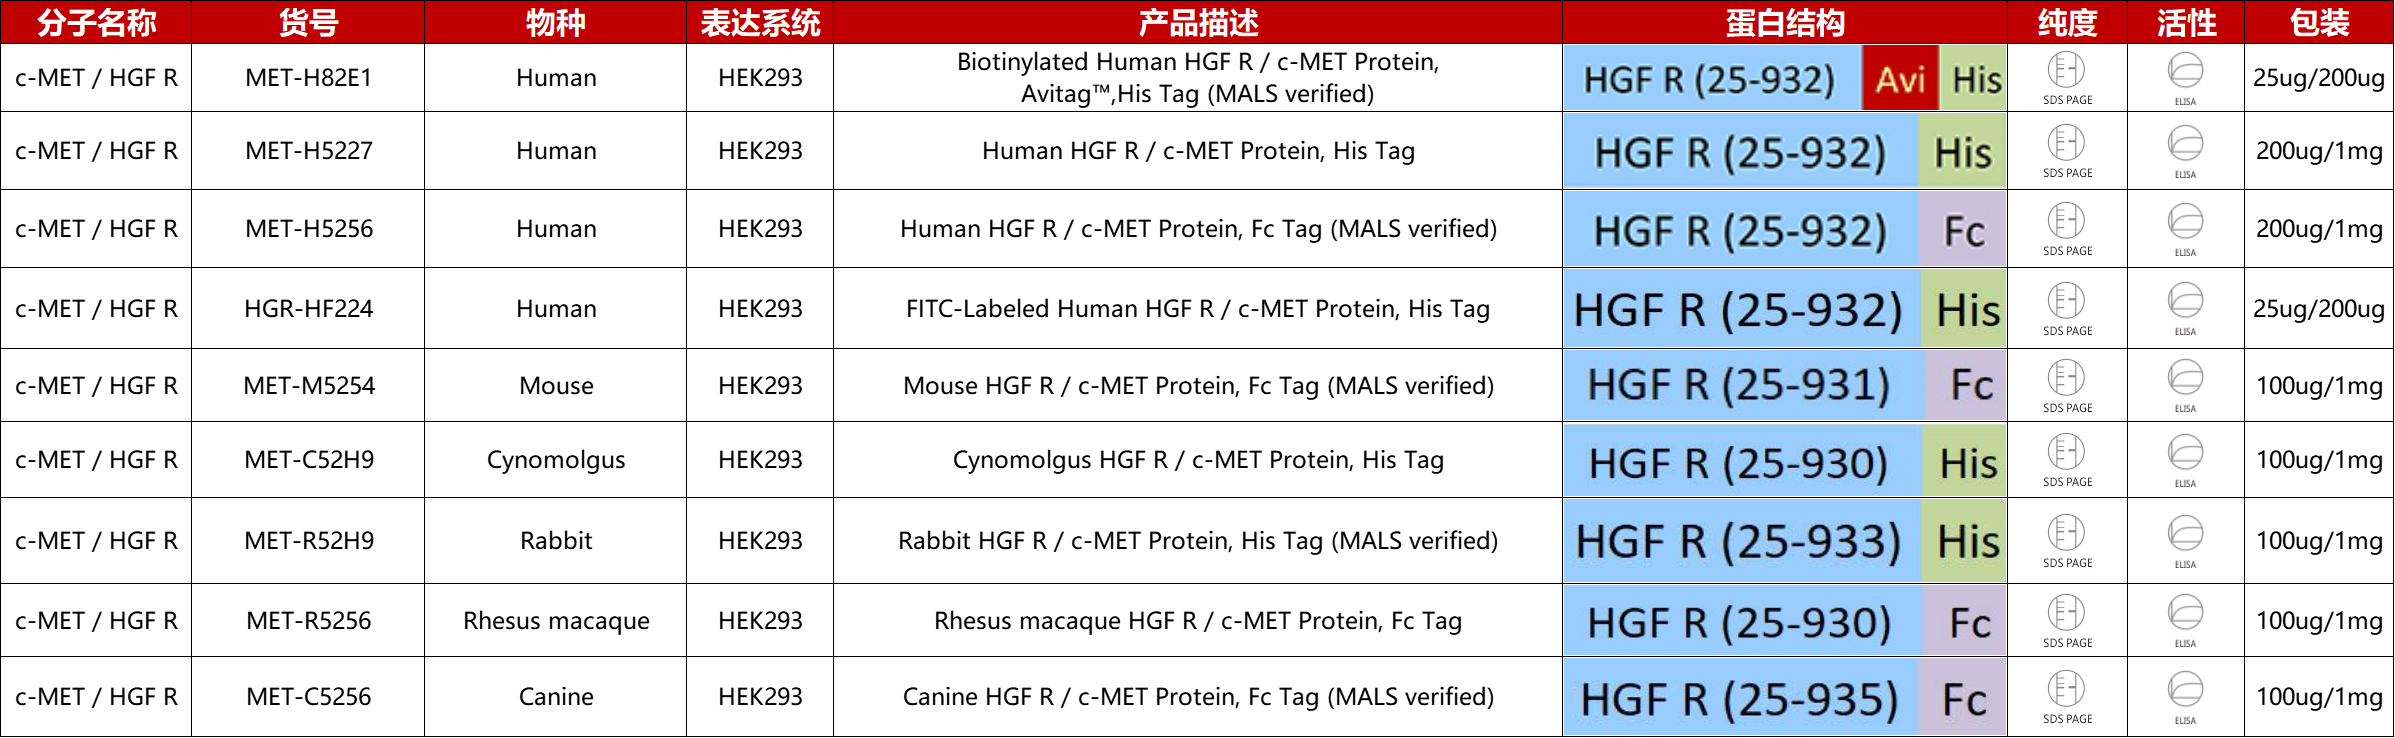 c-MET/HGFR重组蛋白产品列表